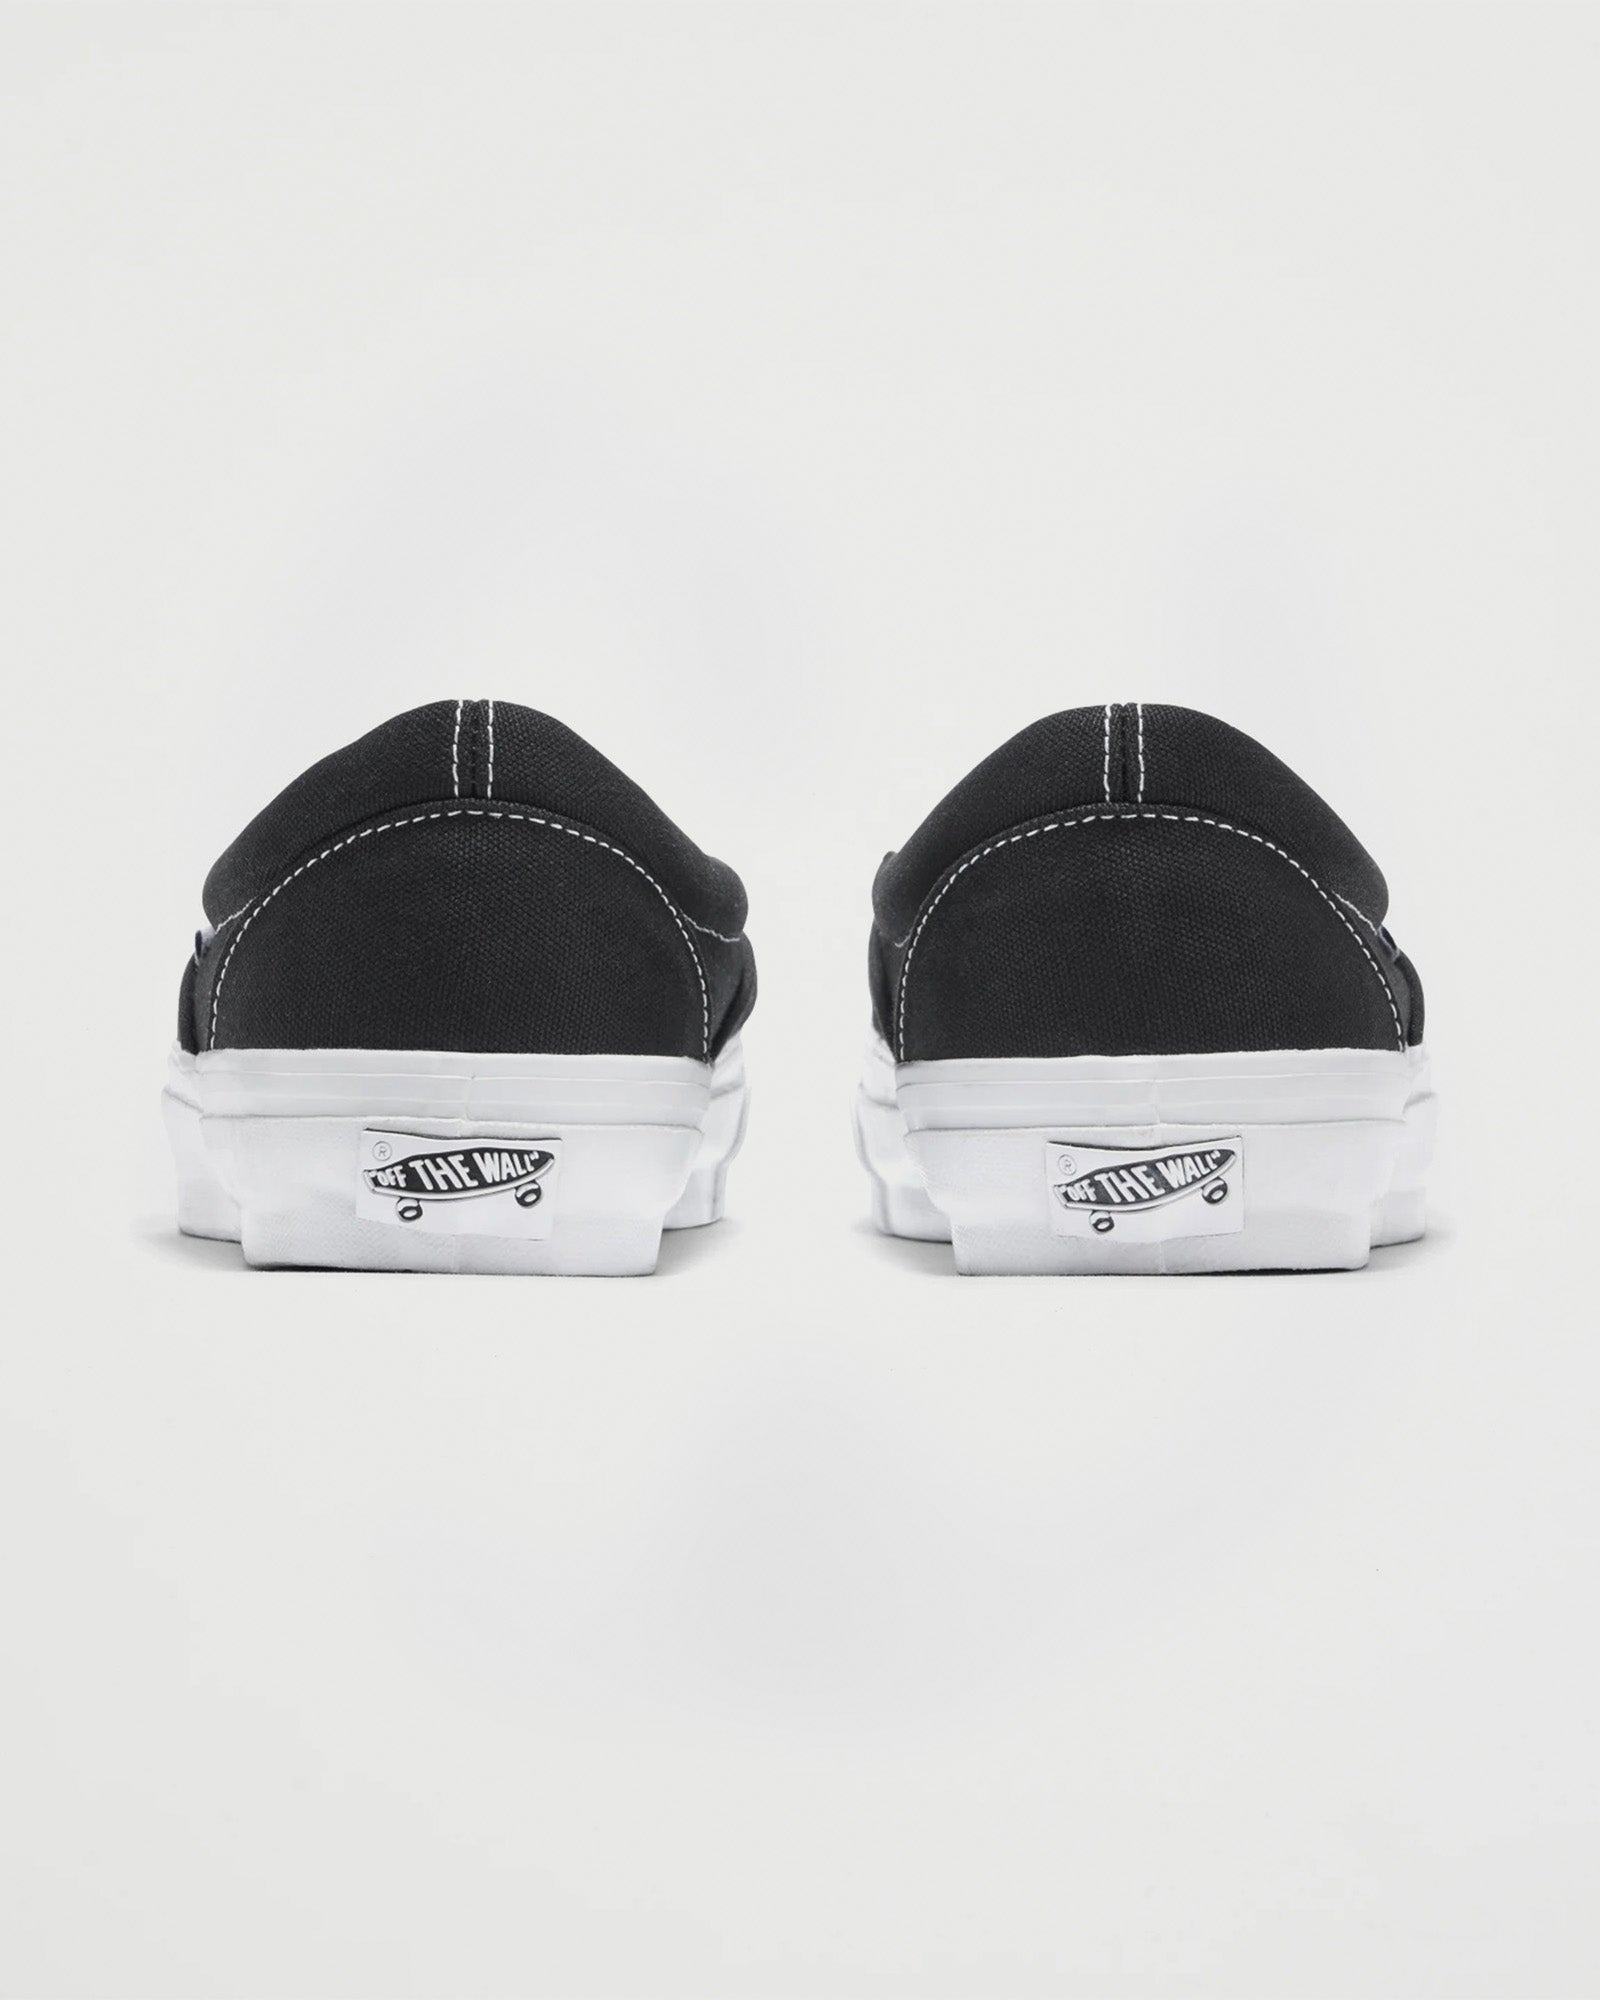 Vans Premium Slip-On Reissue 98 LX Black/White Shoes Sneakers Unisex